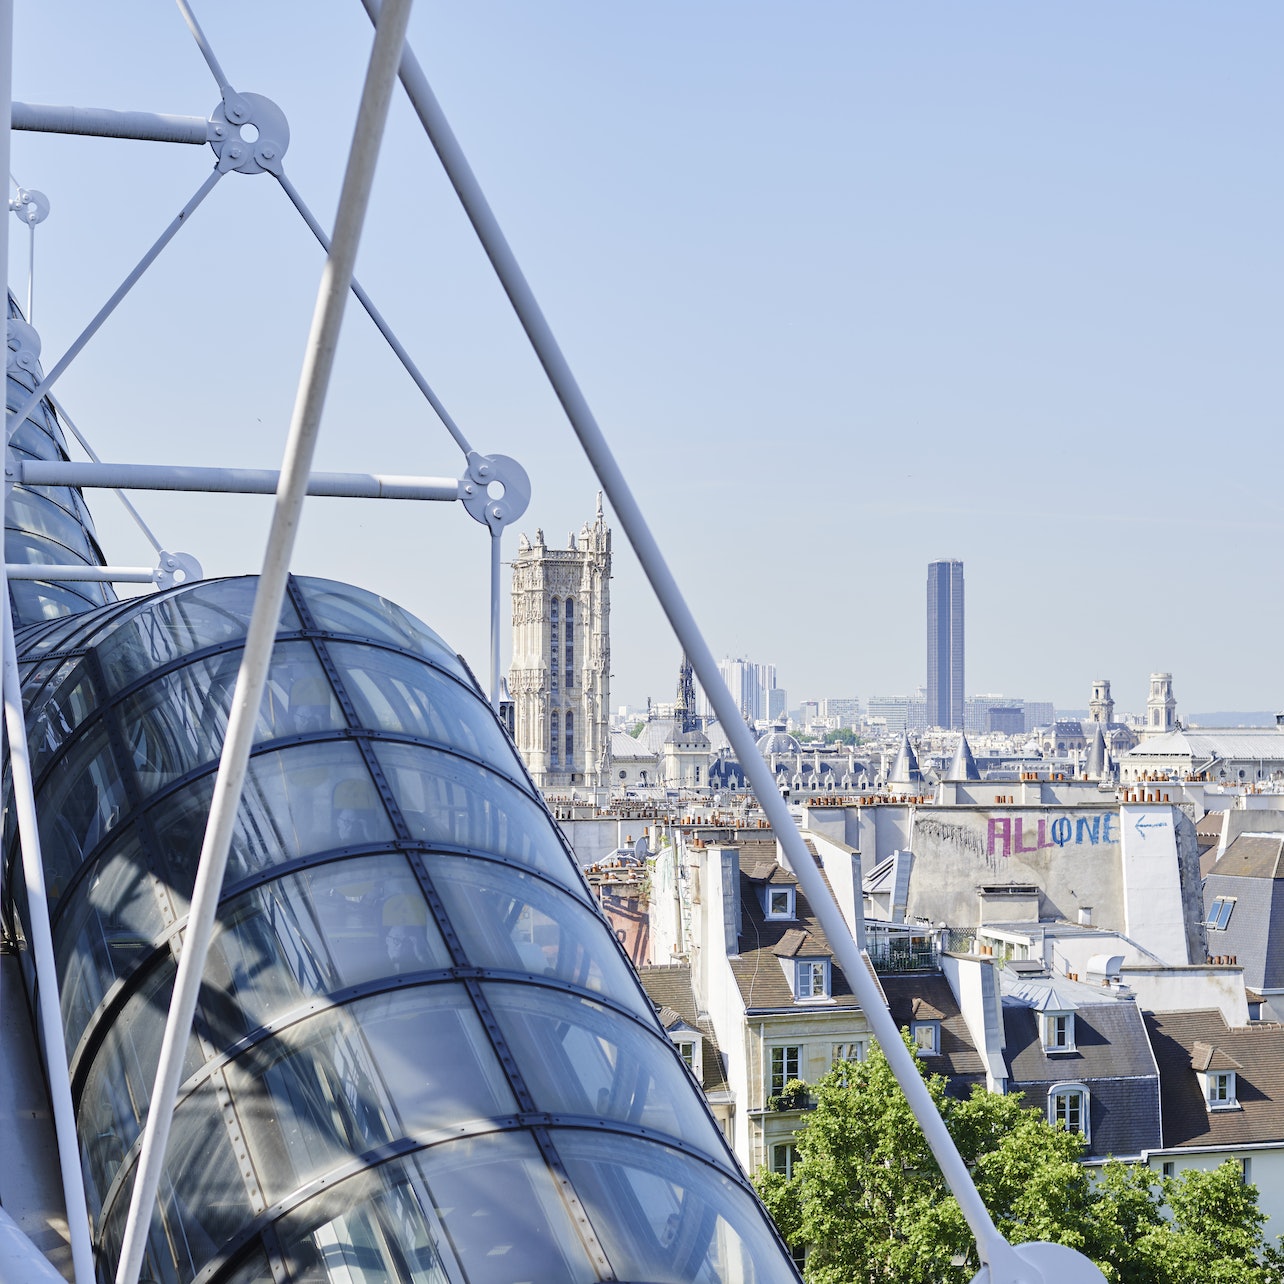 Picture of Centre Pompidou in Paris, France